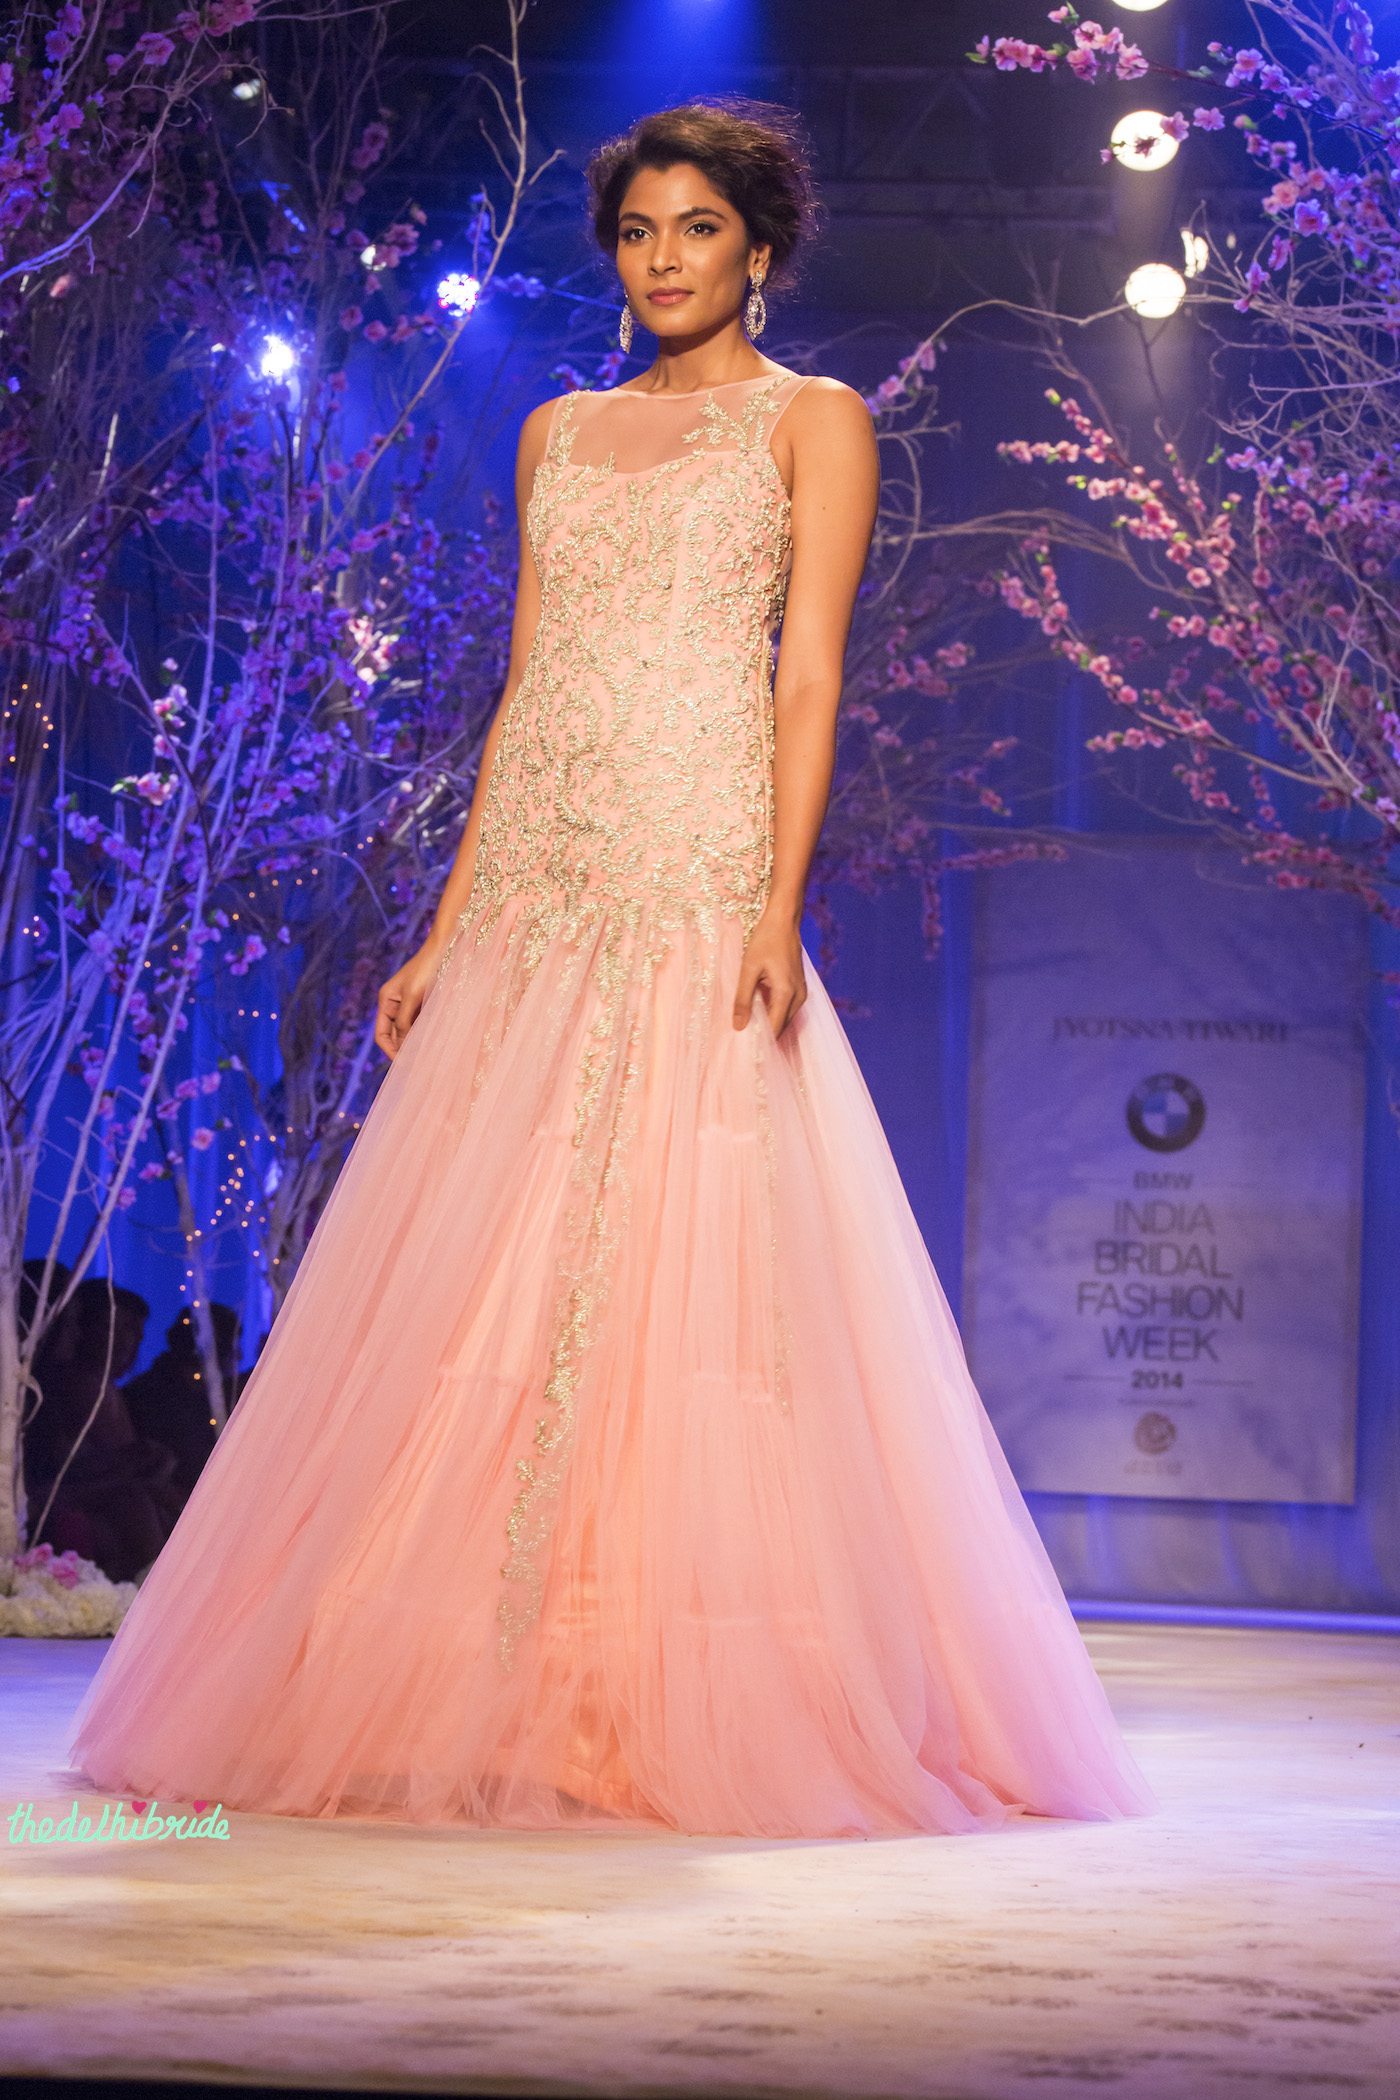 Jyotsna Tiwari at India Bridal Fashion Week 2014 – An Indian ...